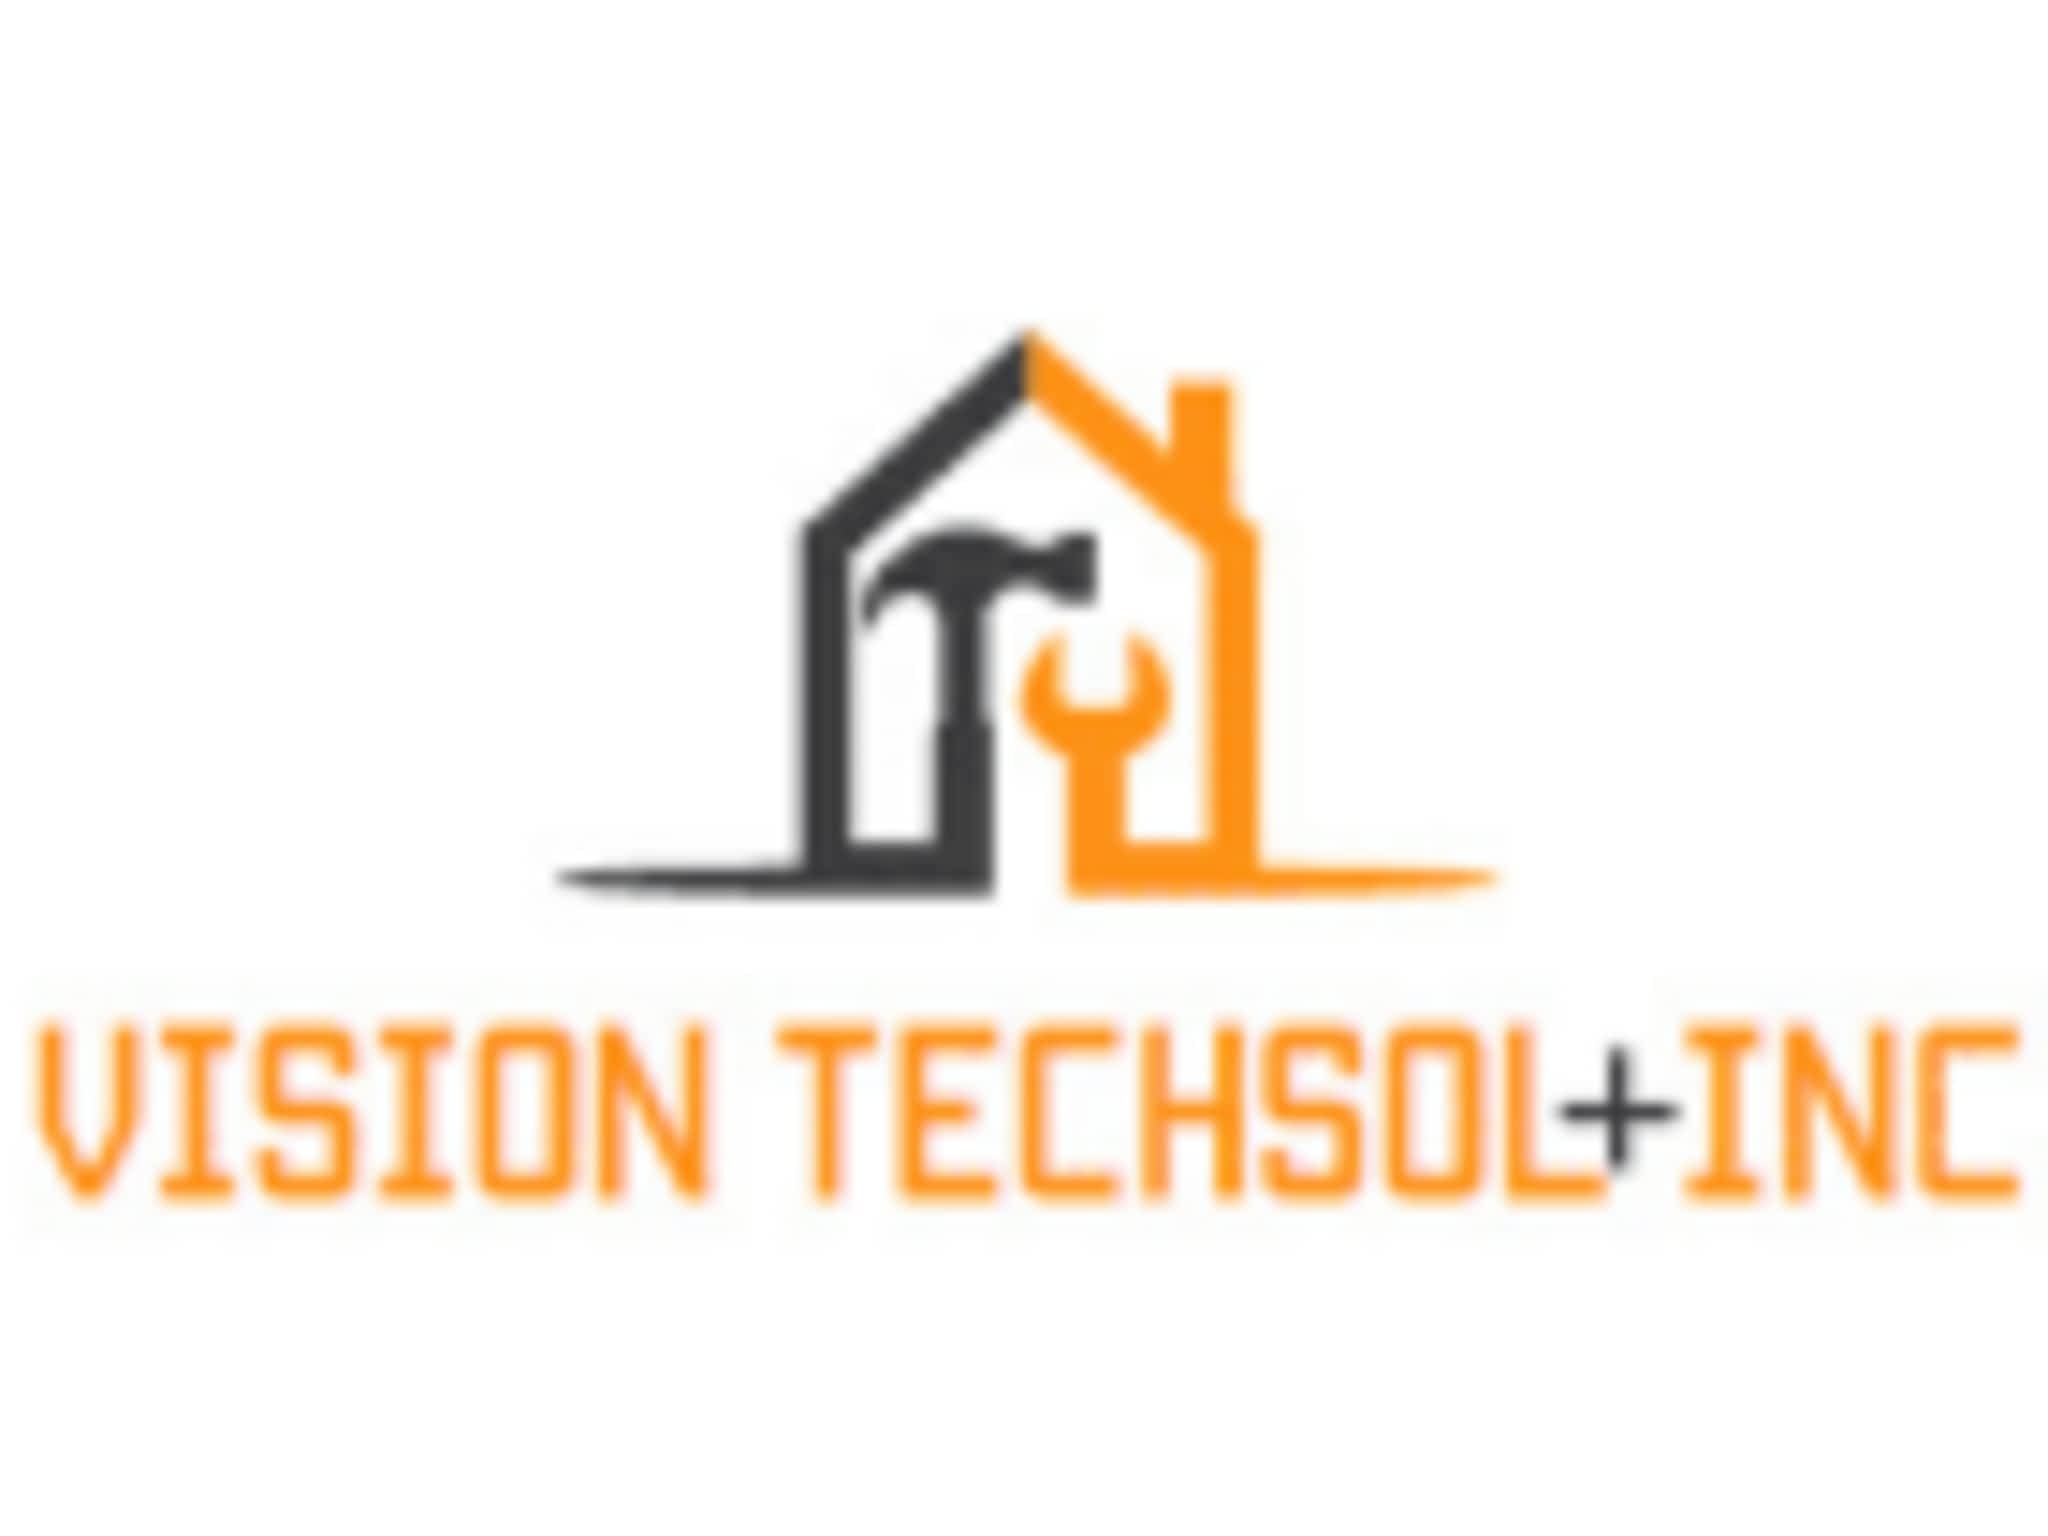 photo Vision Techsol + Inc